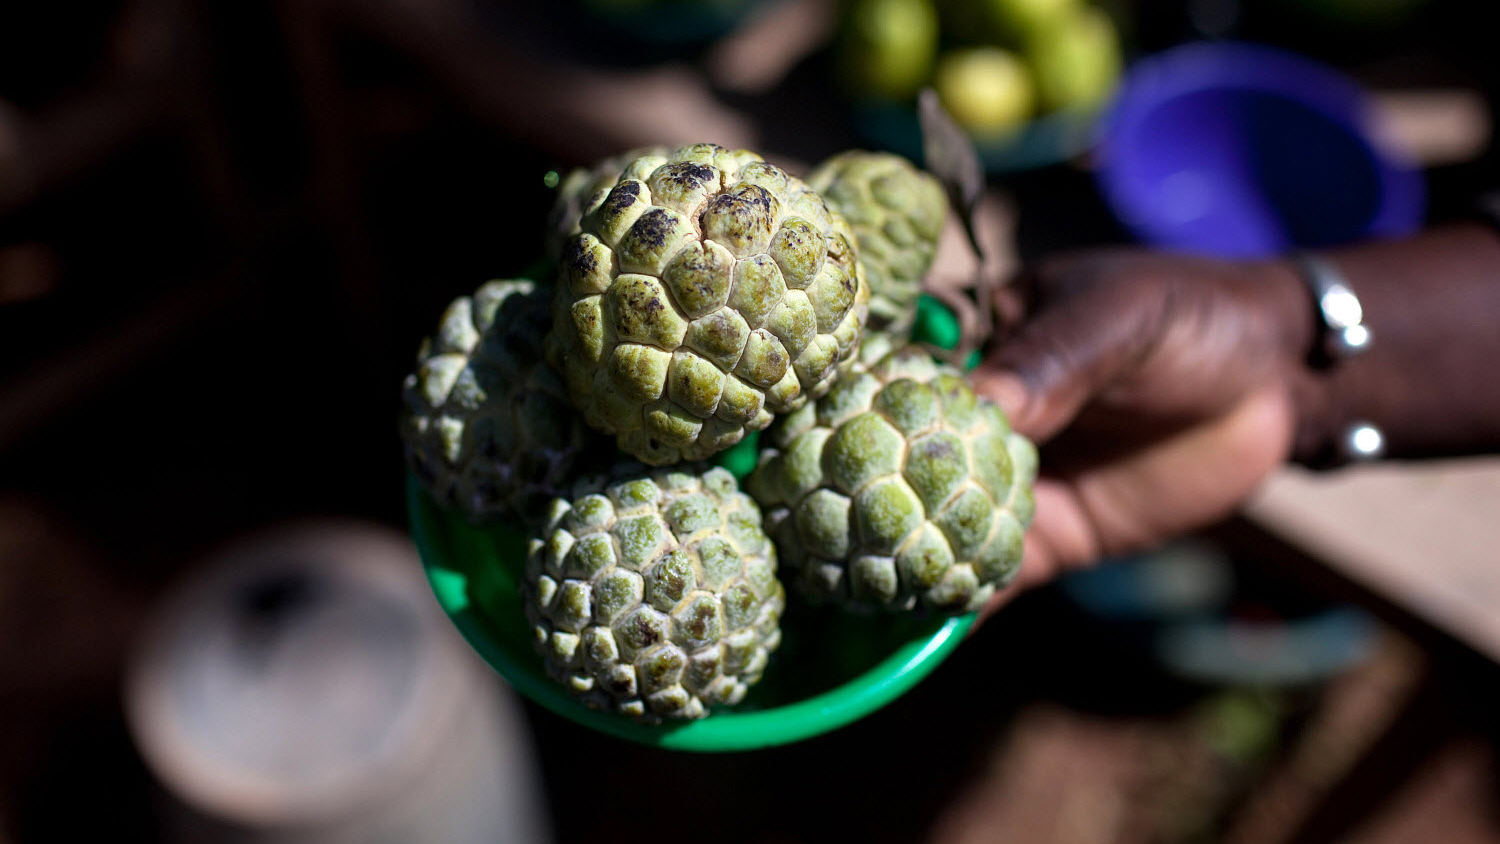 Mali - Sweet sop fruit from the roadside vendor.